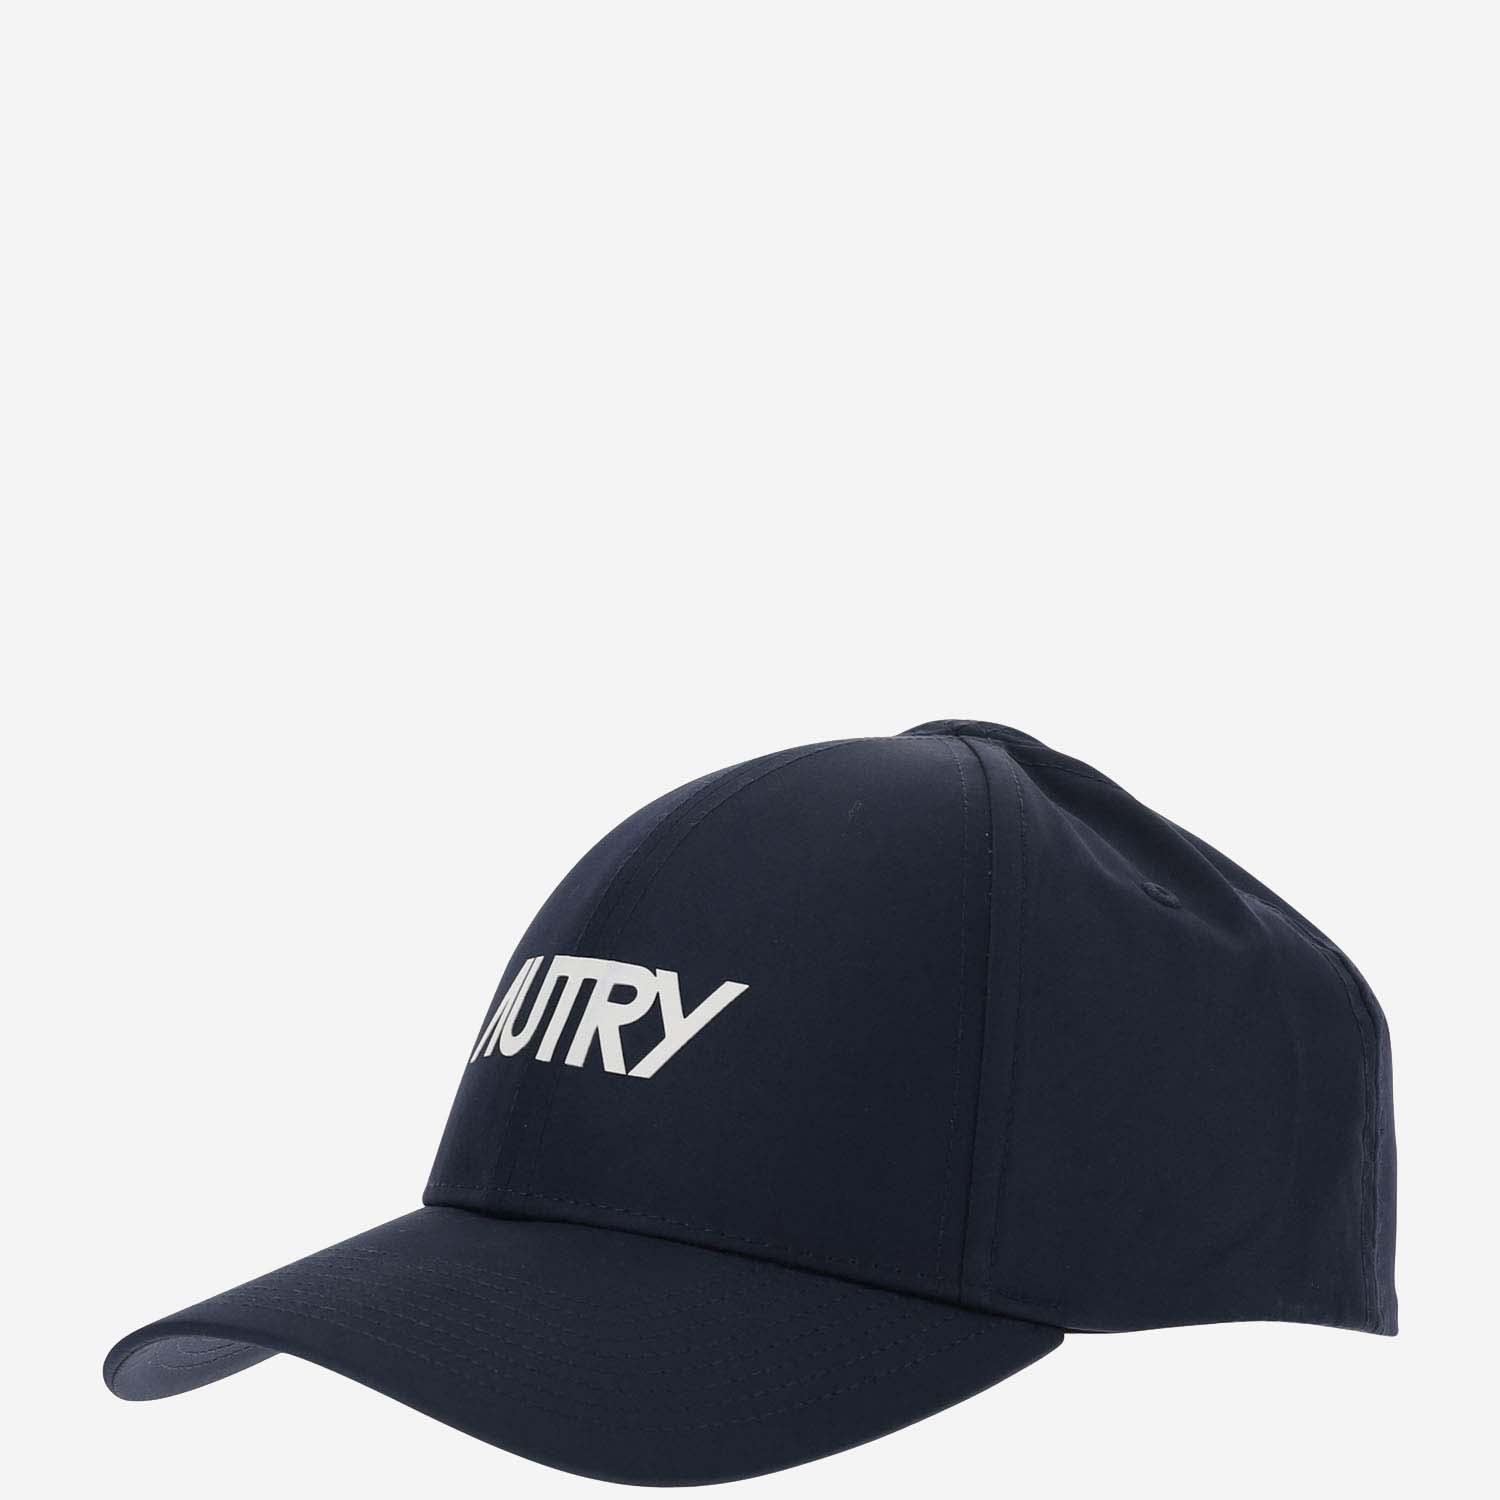 Shop Autry Nylon Baseball Cap With Logo In Blu